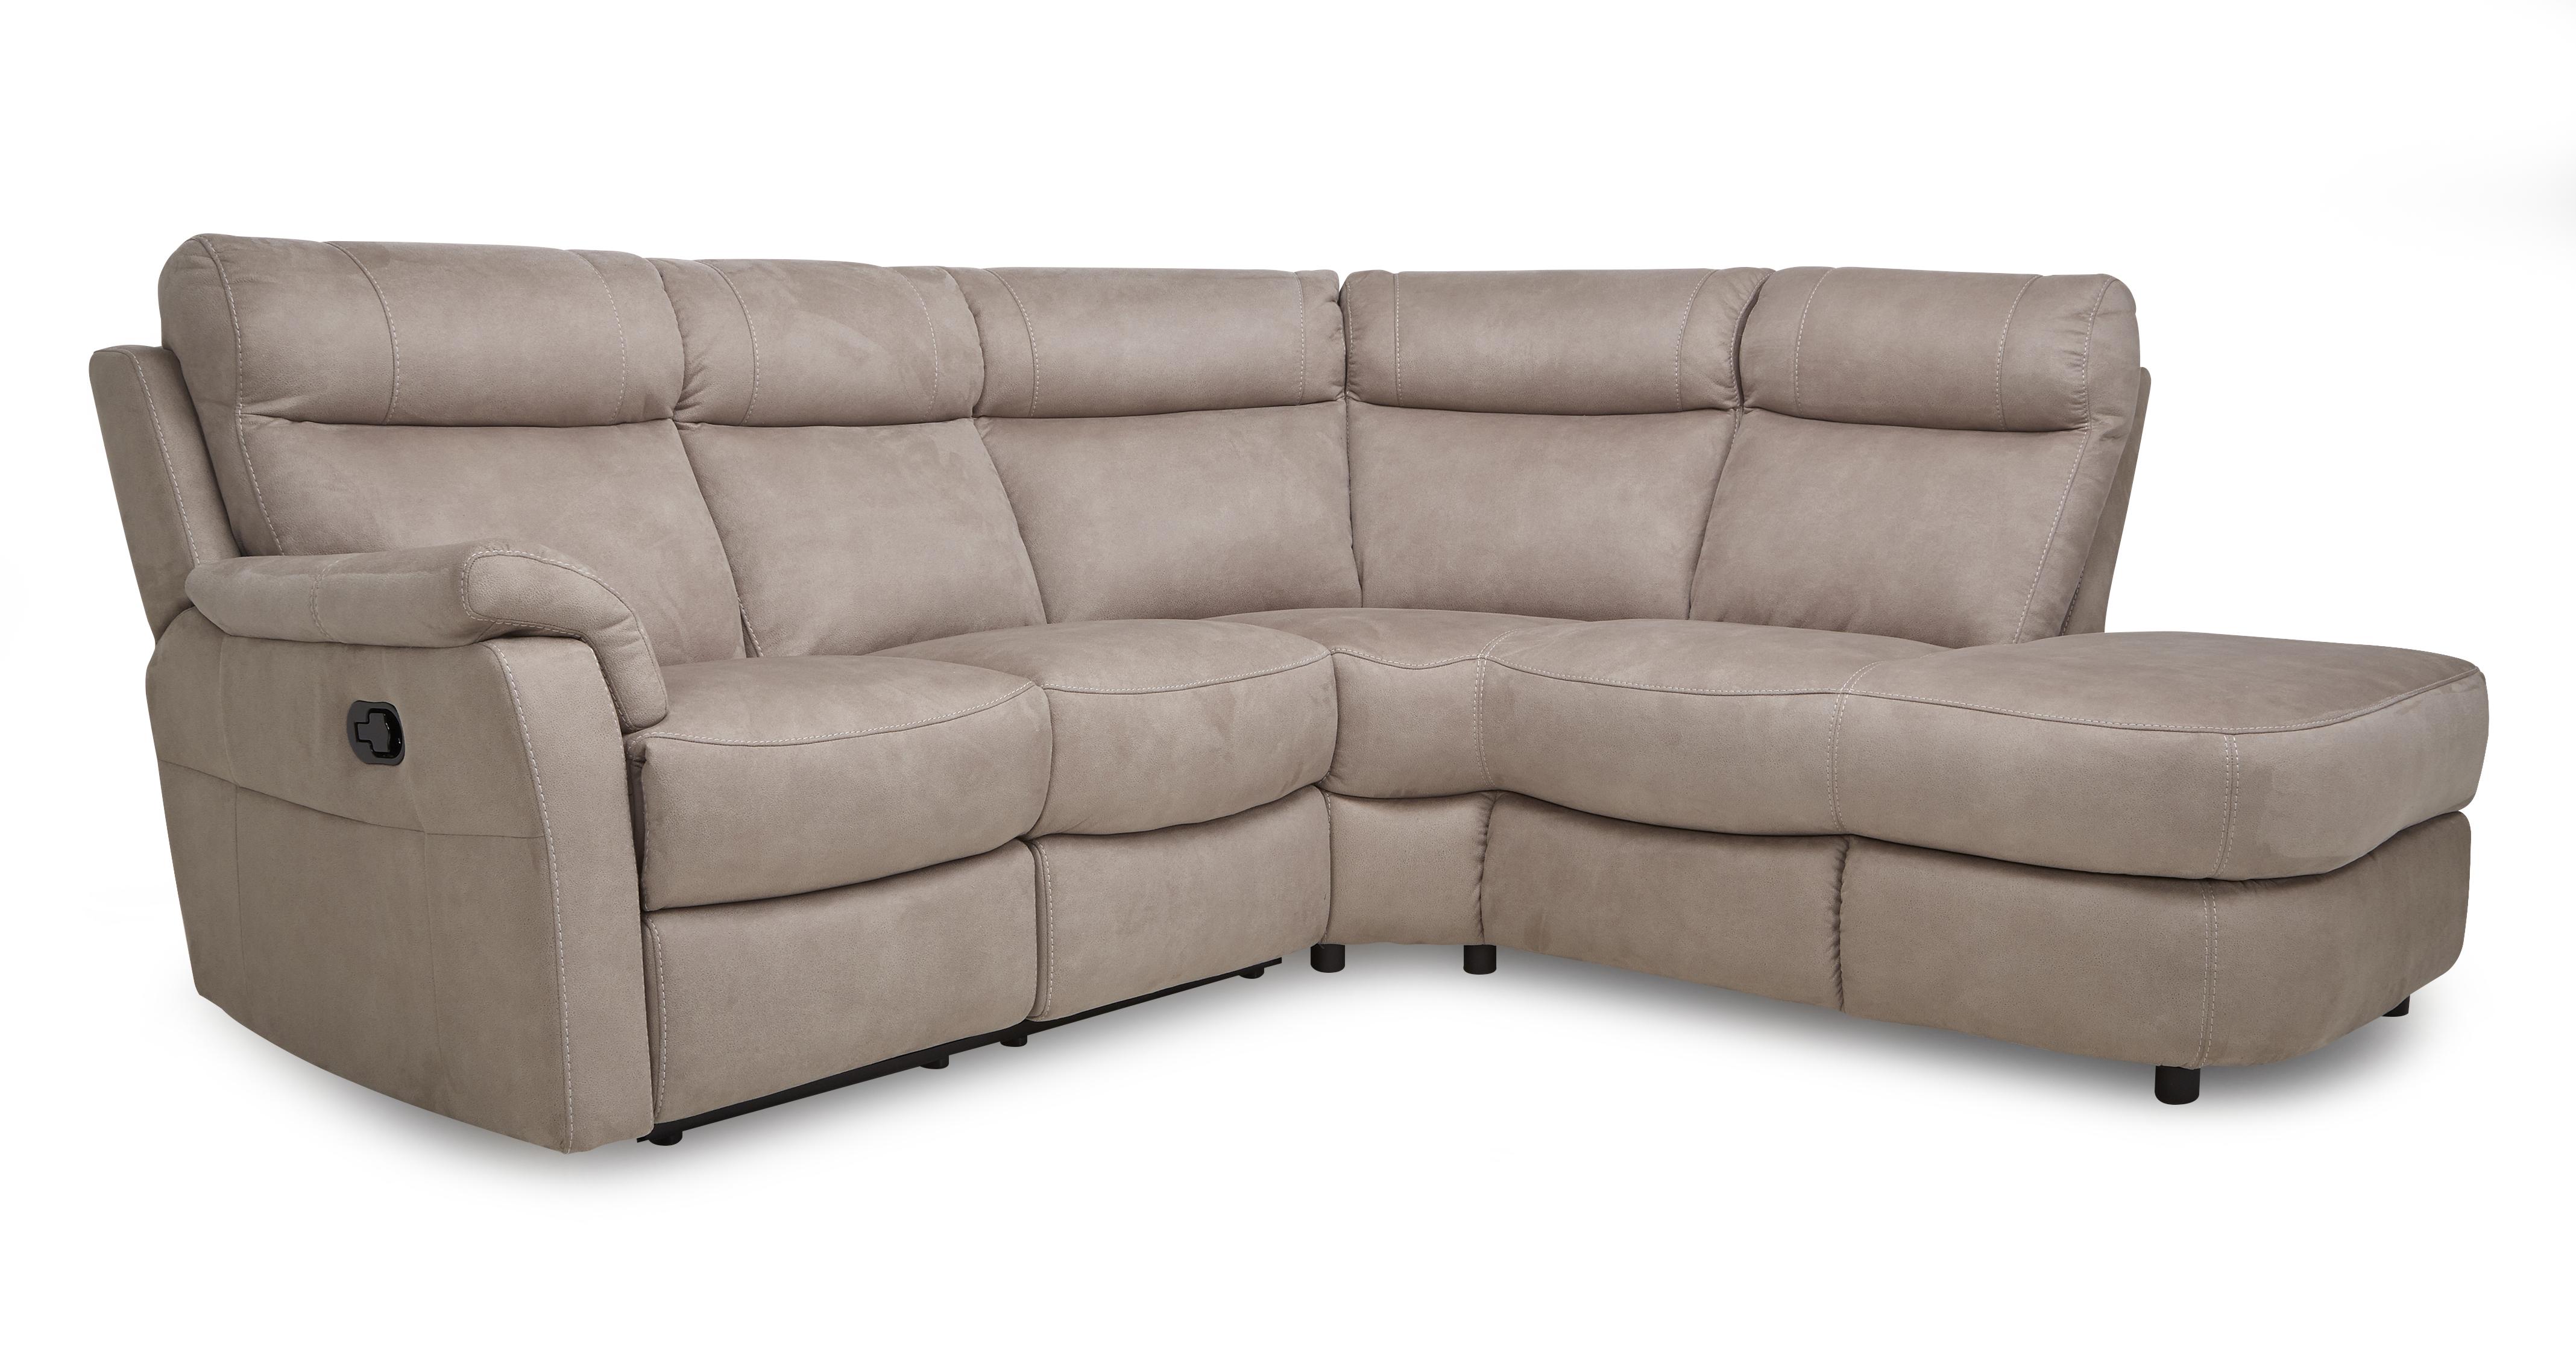 ellis corner leather sofa at dfs